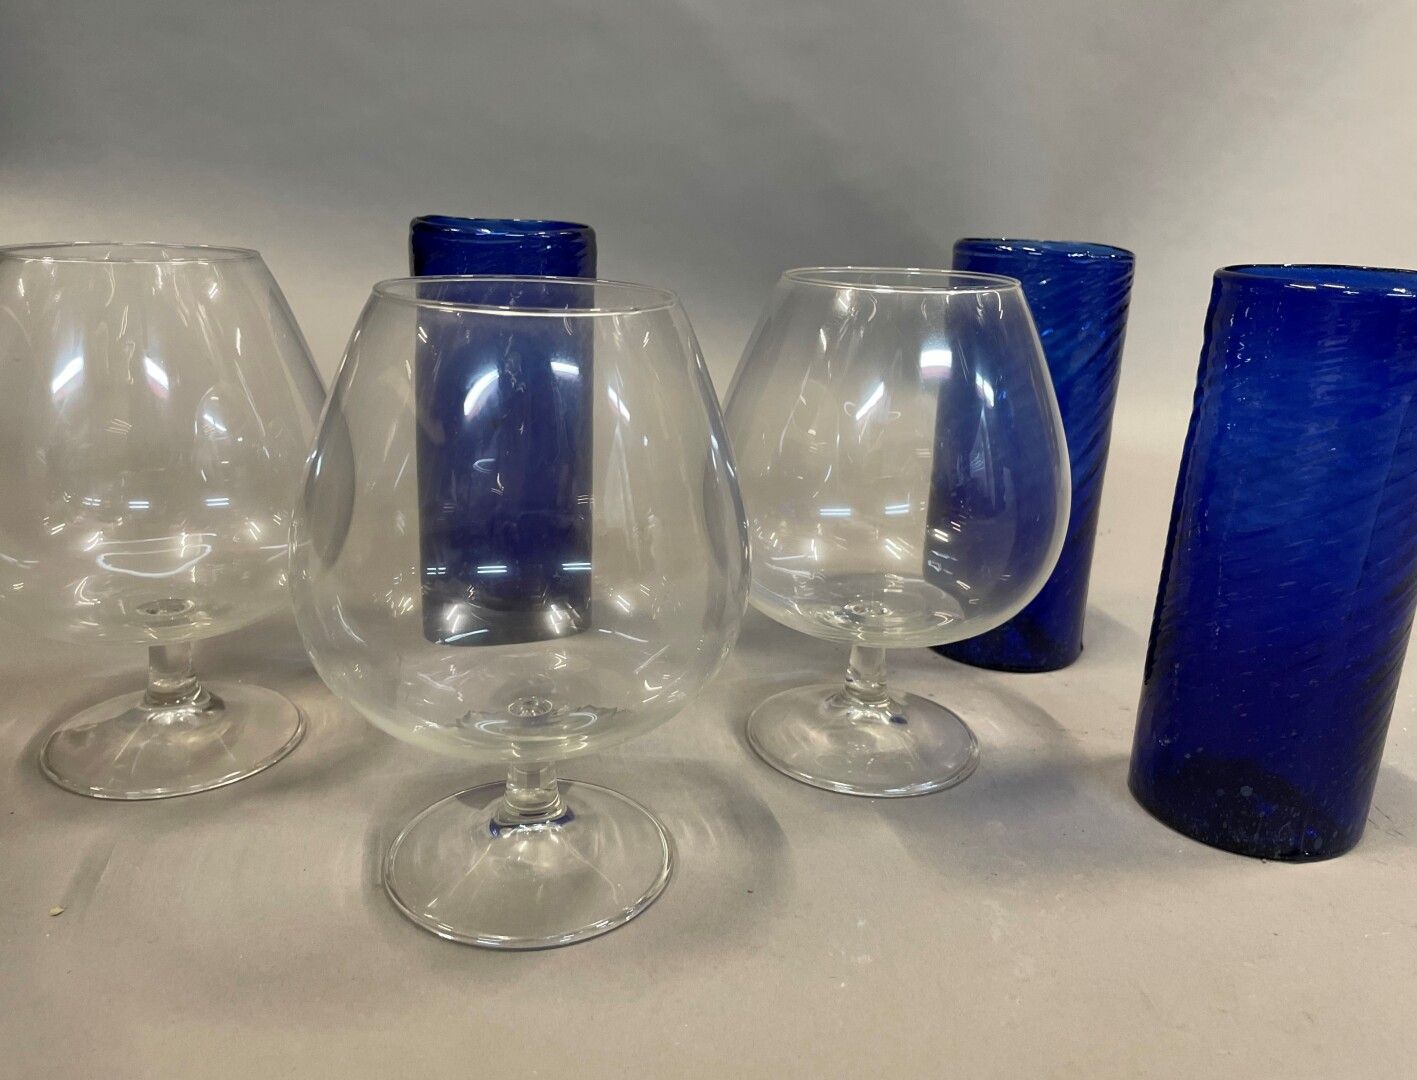 Null 一套12个玻璃干邑杯和12个蓝色泡沫玻璃橙汁杯。